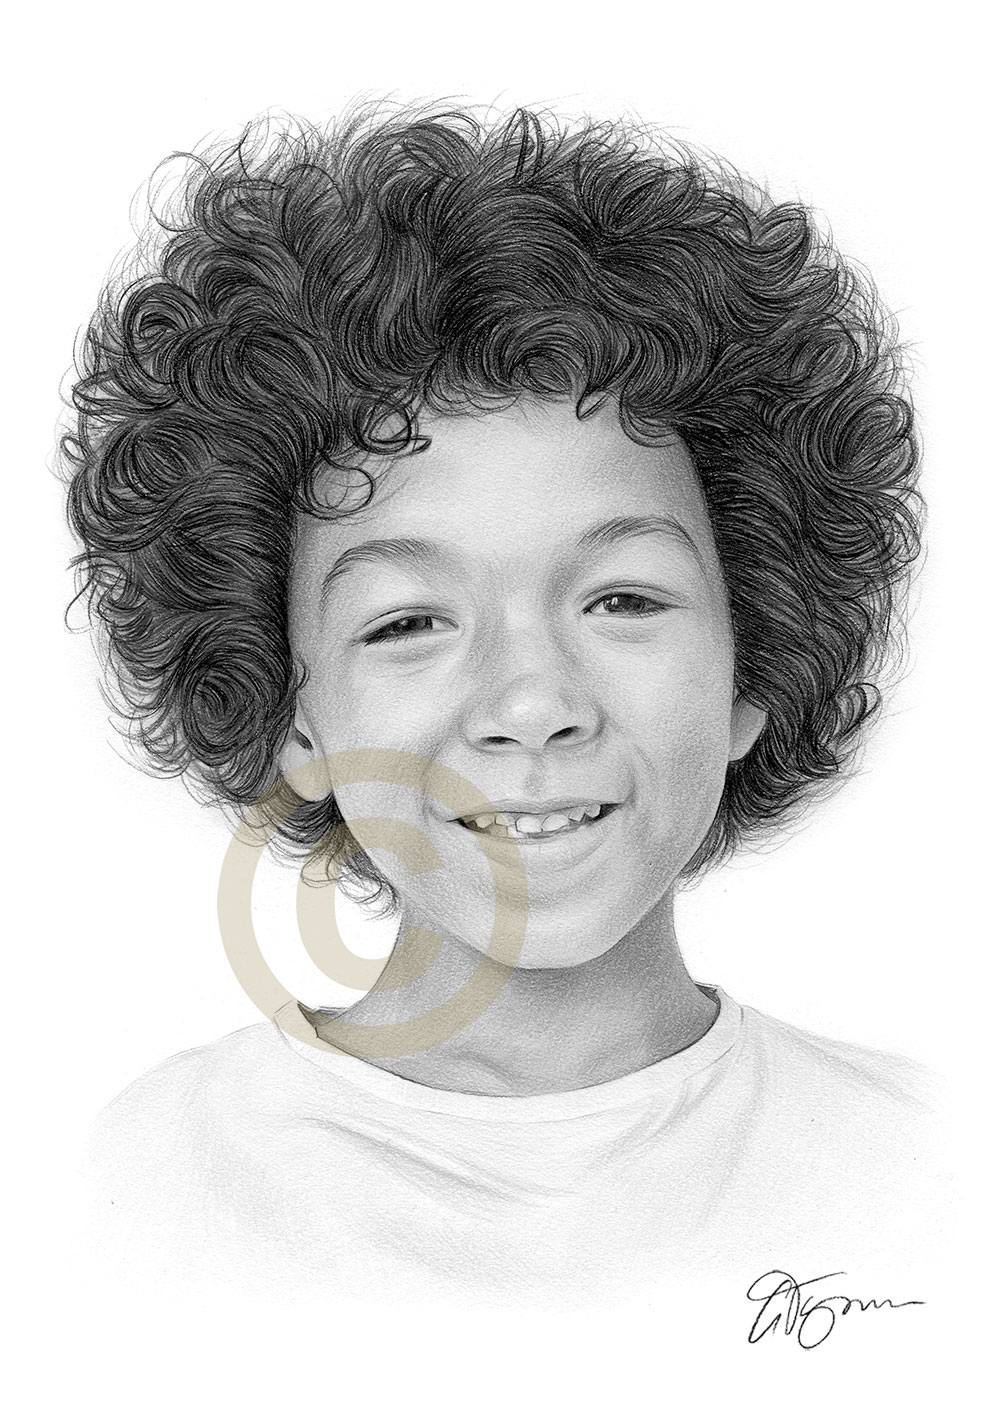 Pencil portrait commission of Ben by artist Gary Tymon